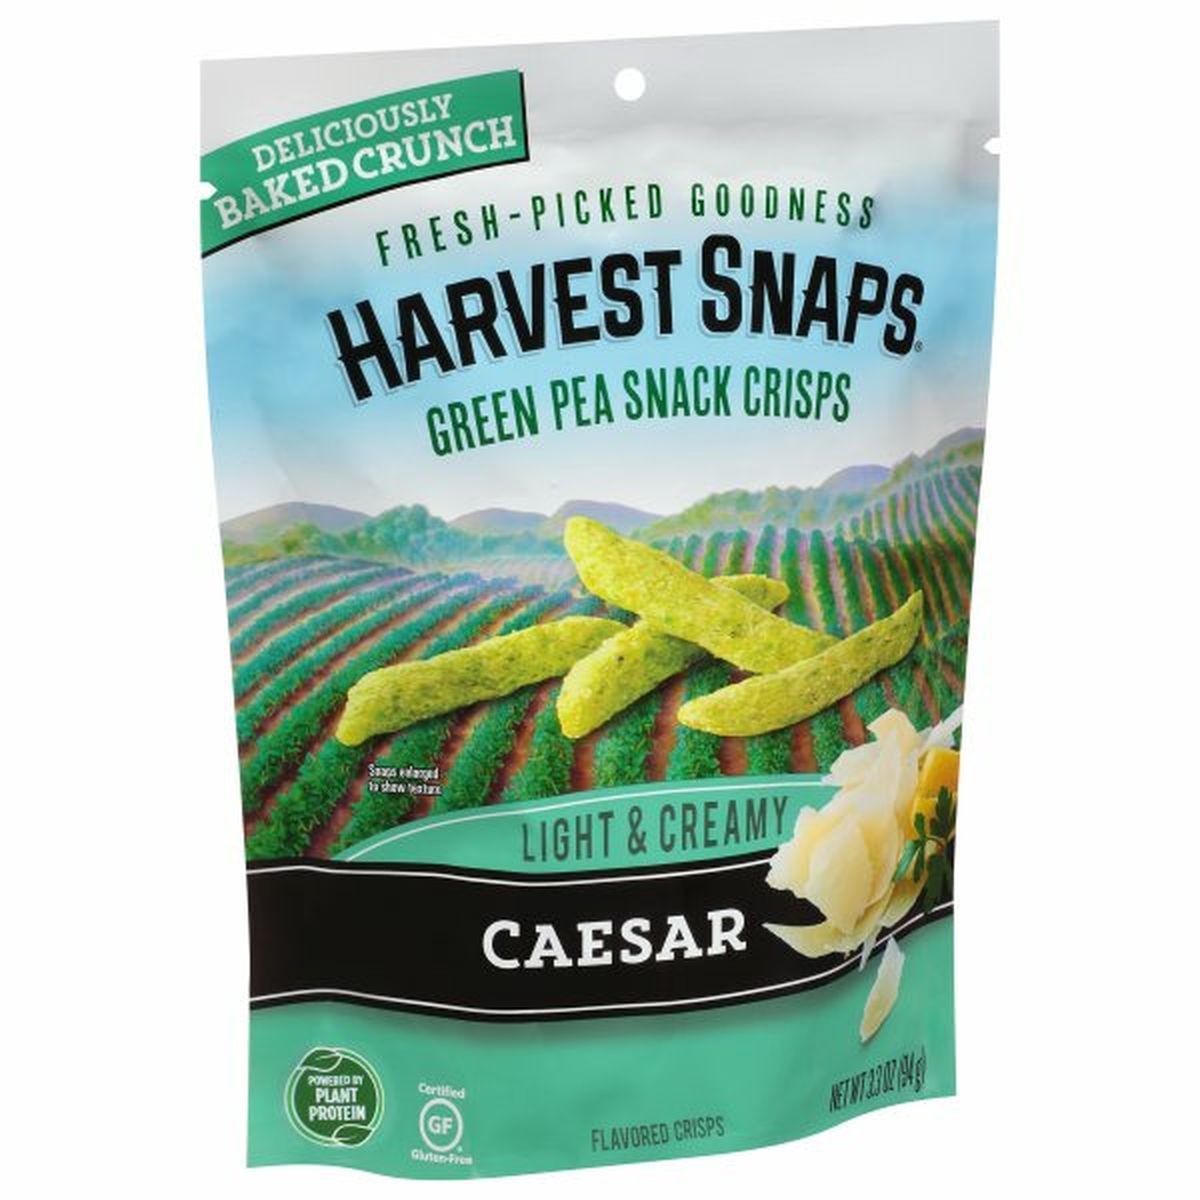 Calories in Harvest Snaps Green Pea Snack Crisps, Caesar, Light & Creamy